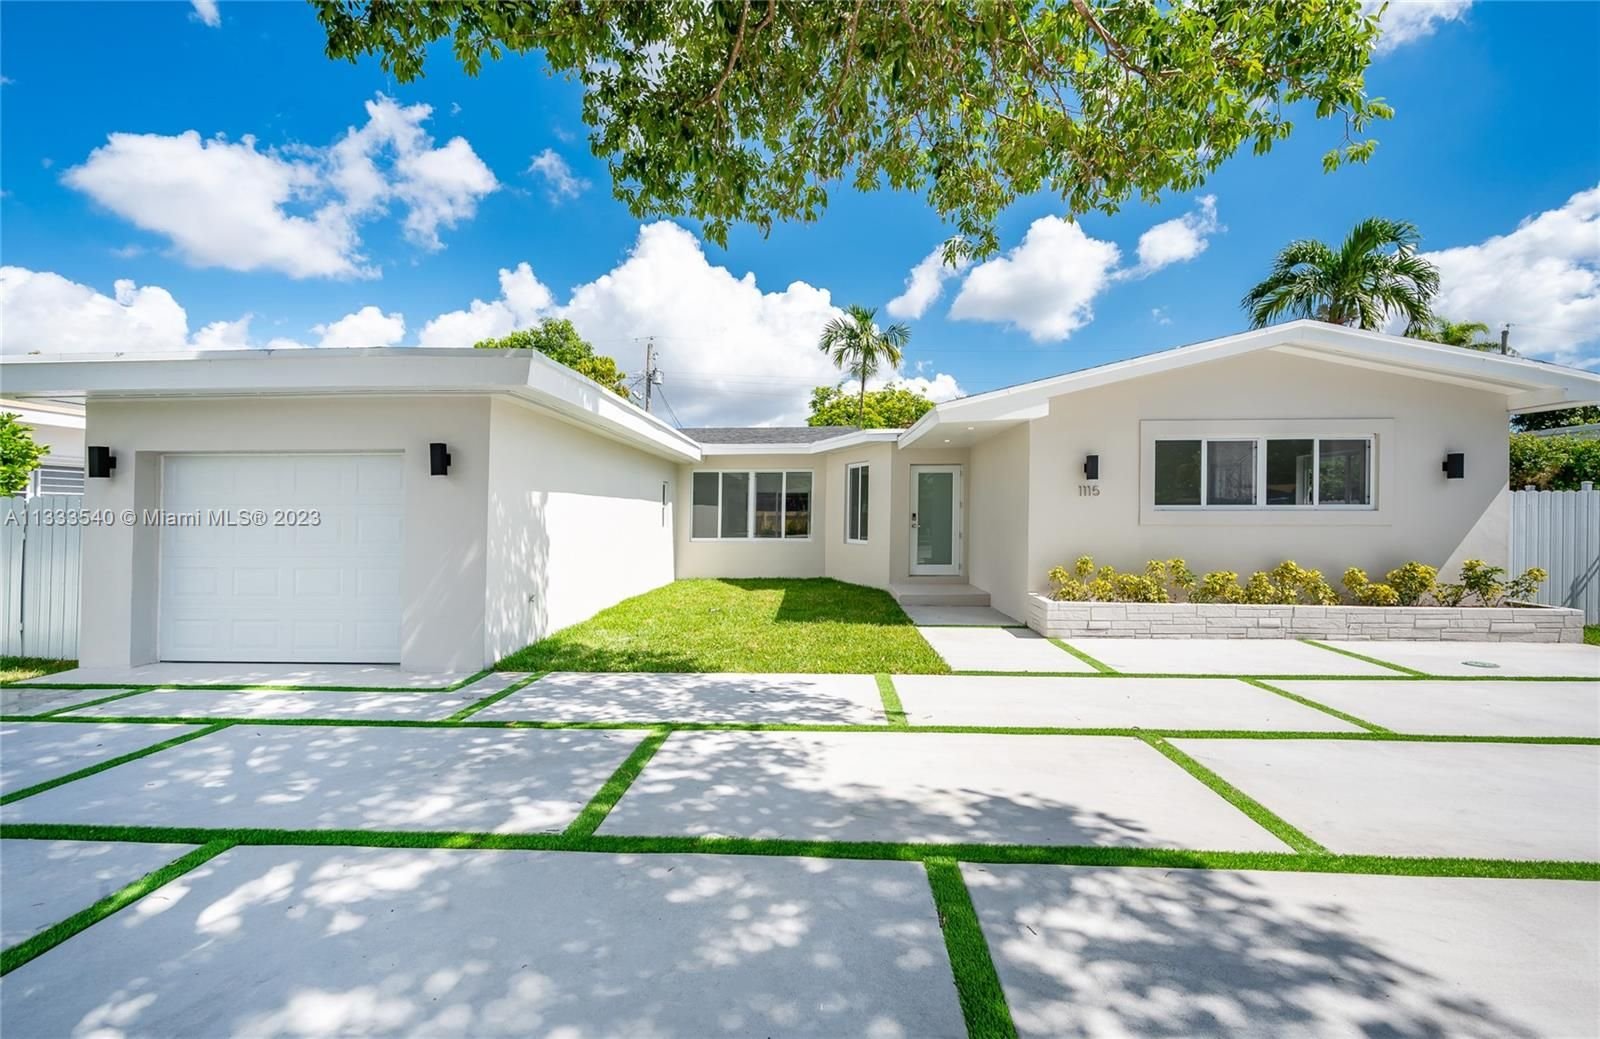 Real estate property located at 1115 110th St, Miami-Dade County, Miami, FL